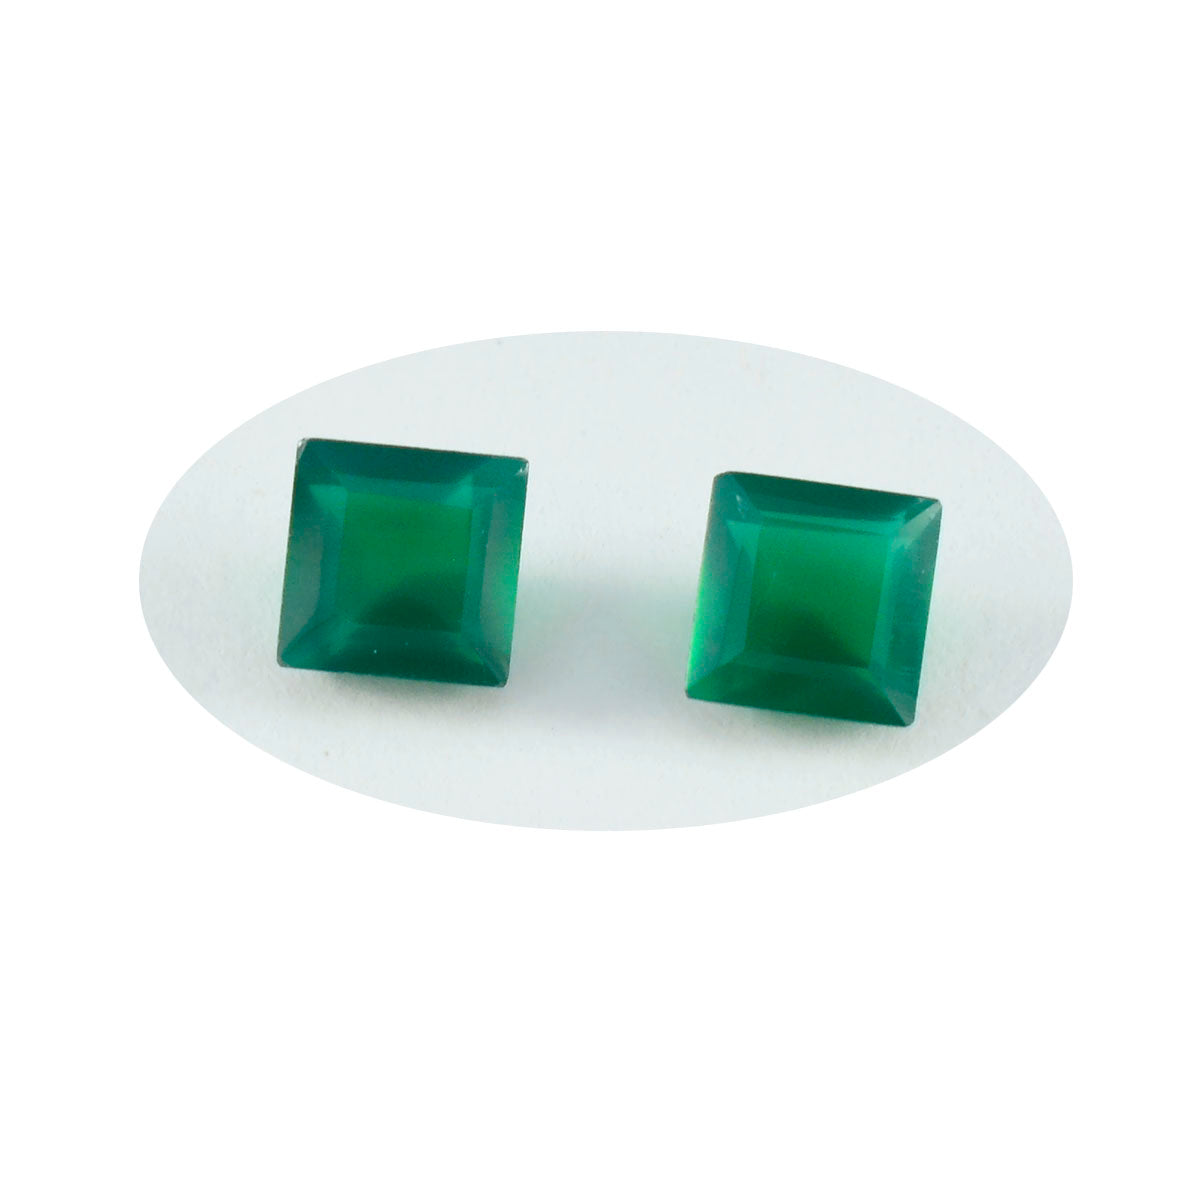 Riyogems 1PC Genuine Green Onyx Faceted 9x9 mm Square Shape astonishing Quality Gemstone